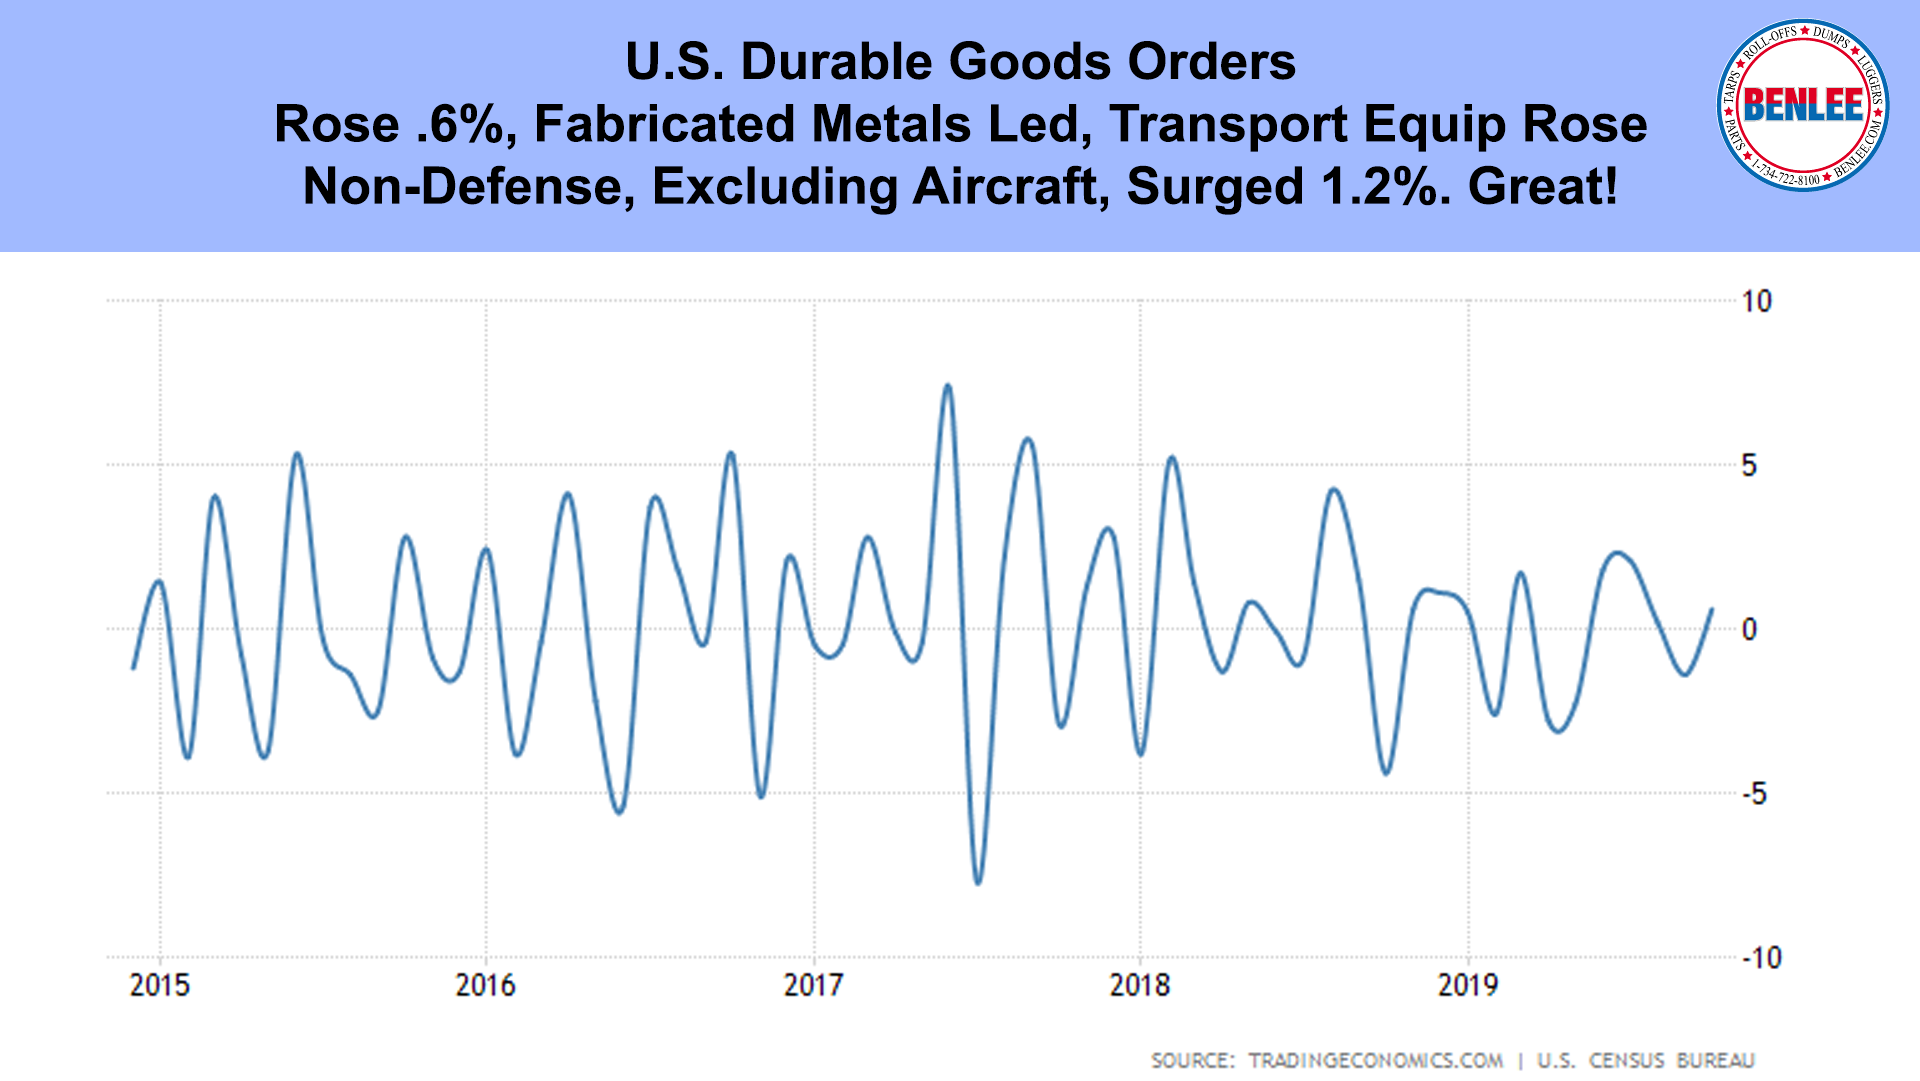 U.S. Durable Goods Orders